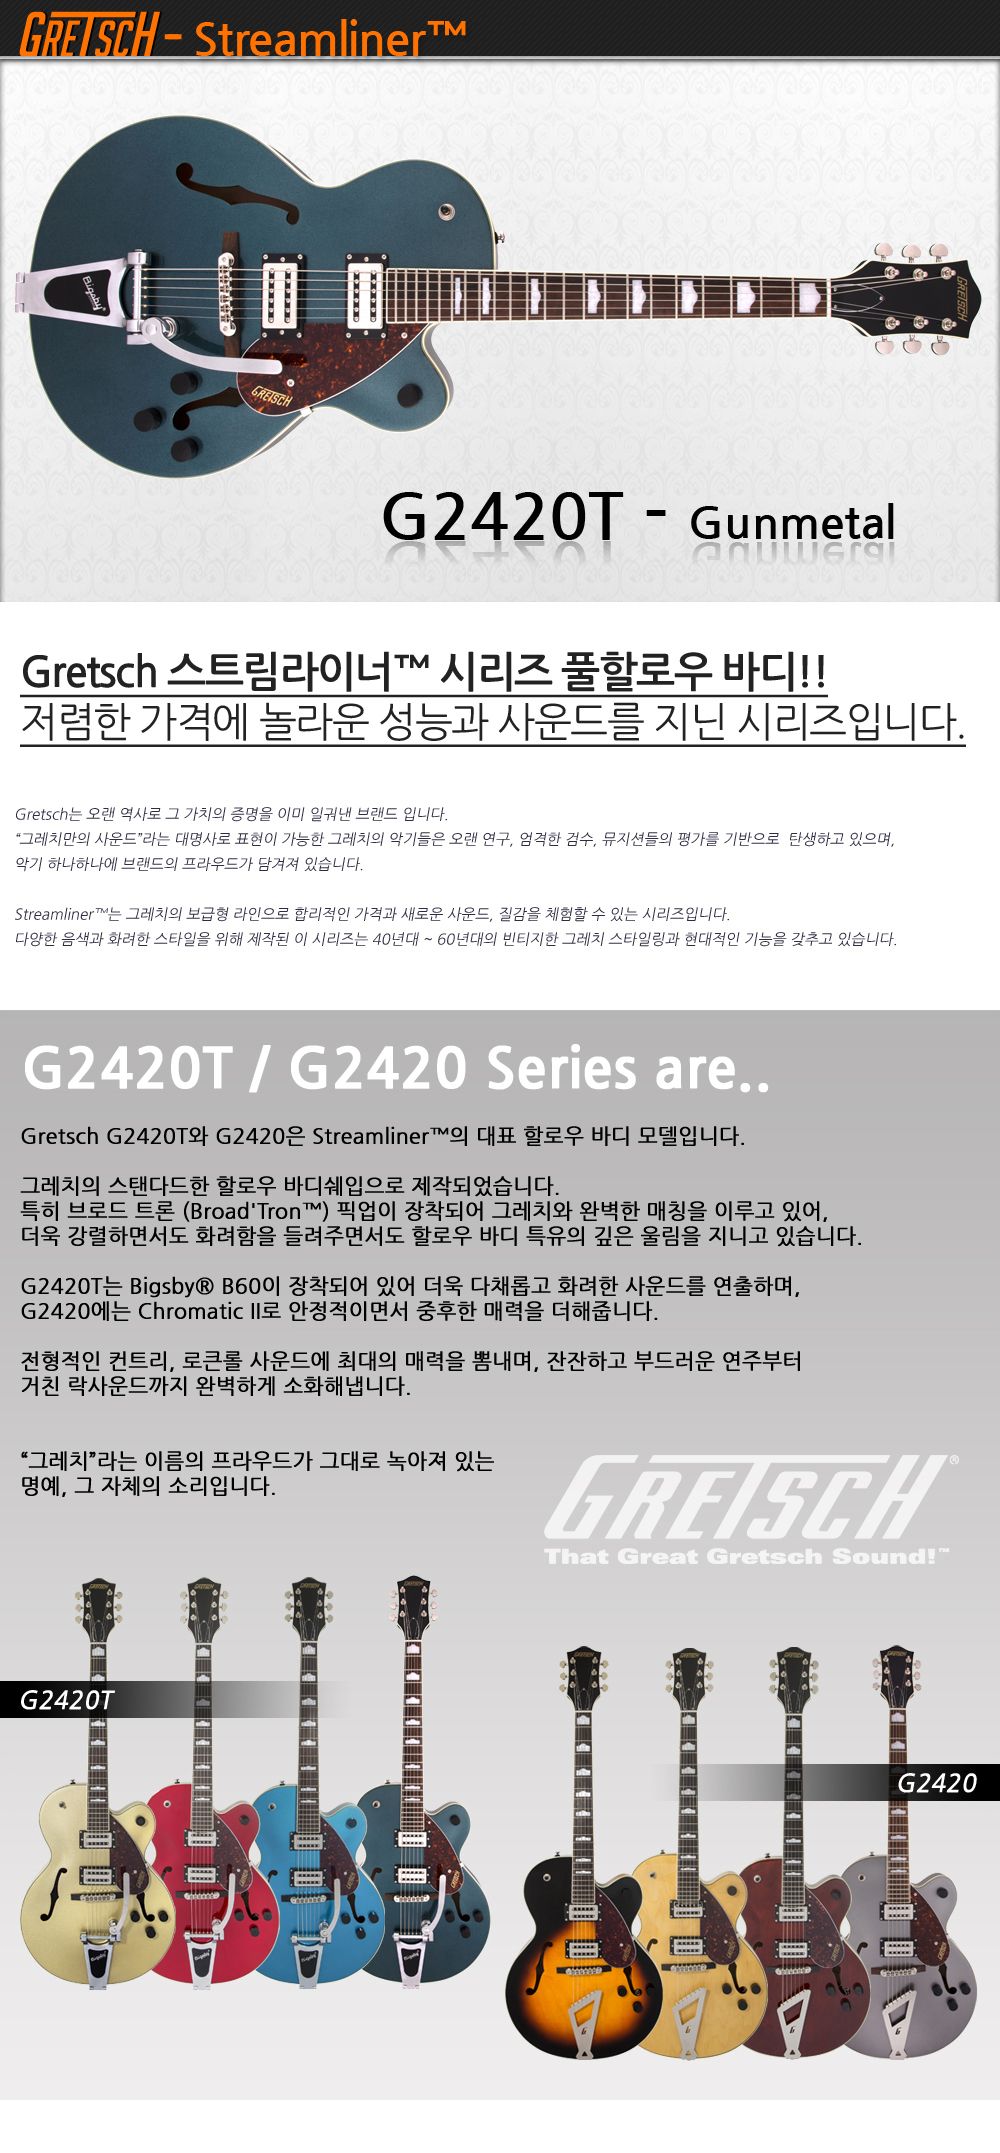 Gretsch-G2420T-Gunmetal_1_172406.jpg